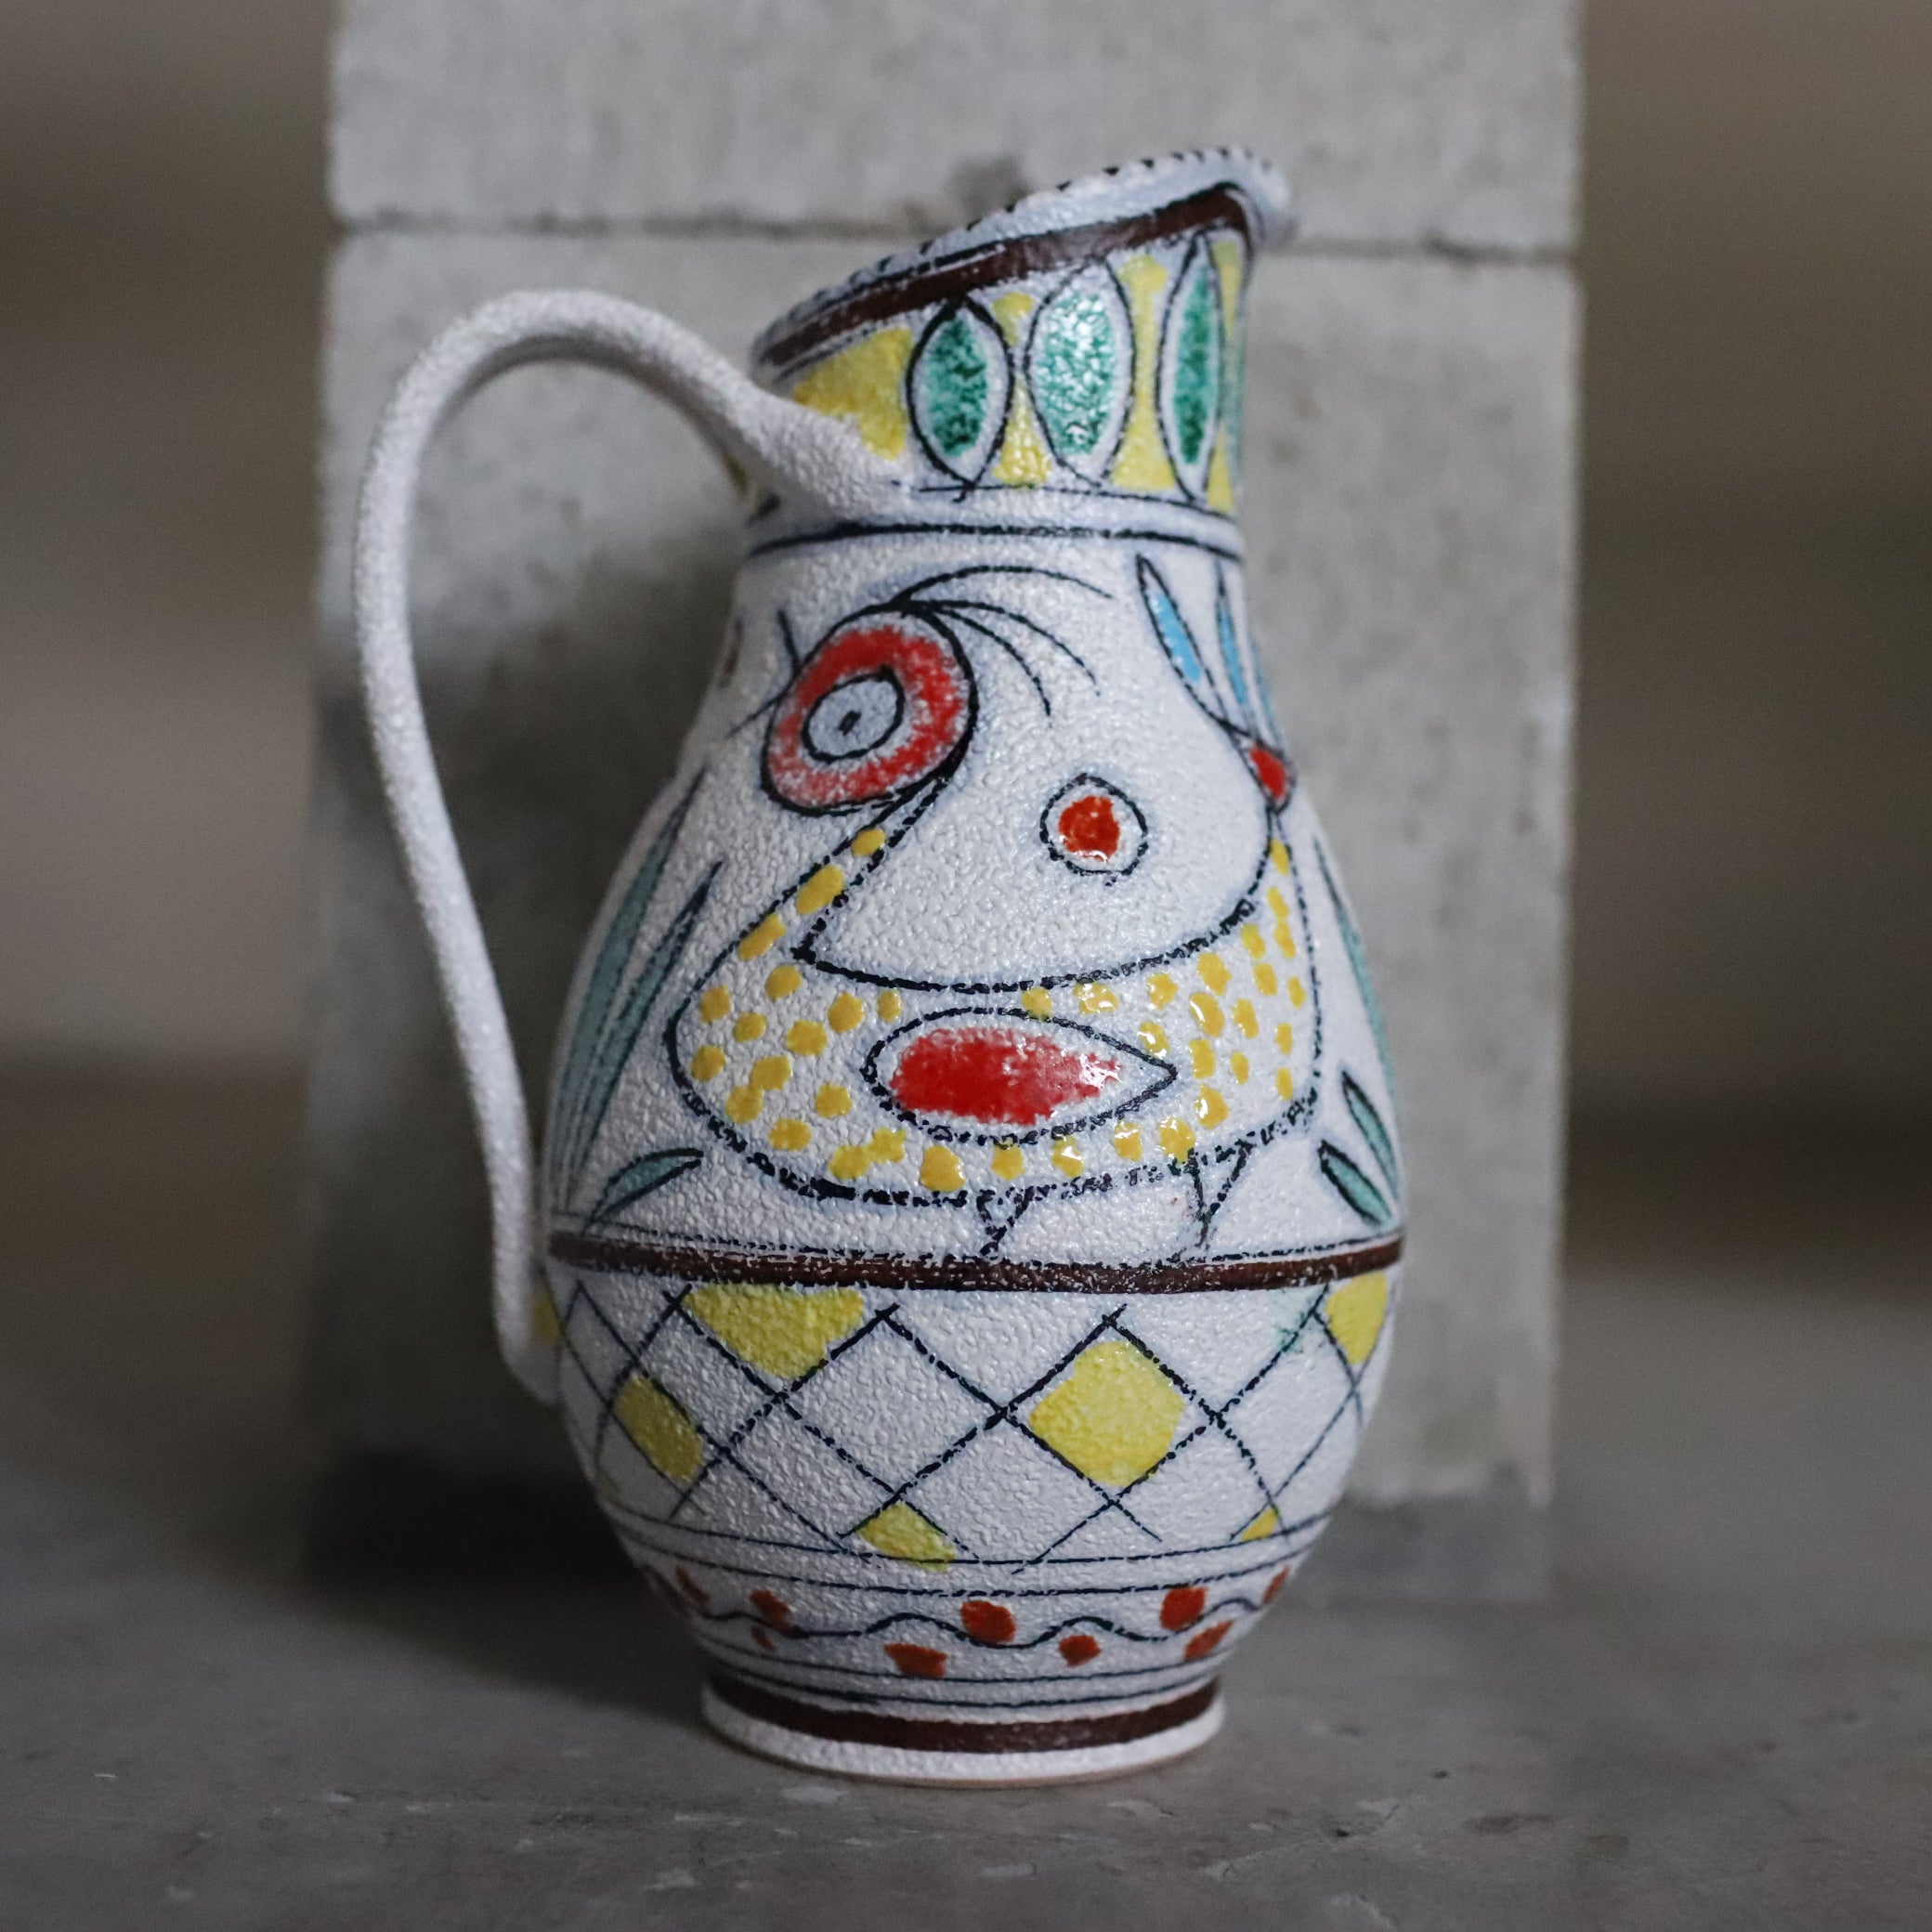 Vintage vase #33